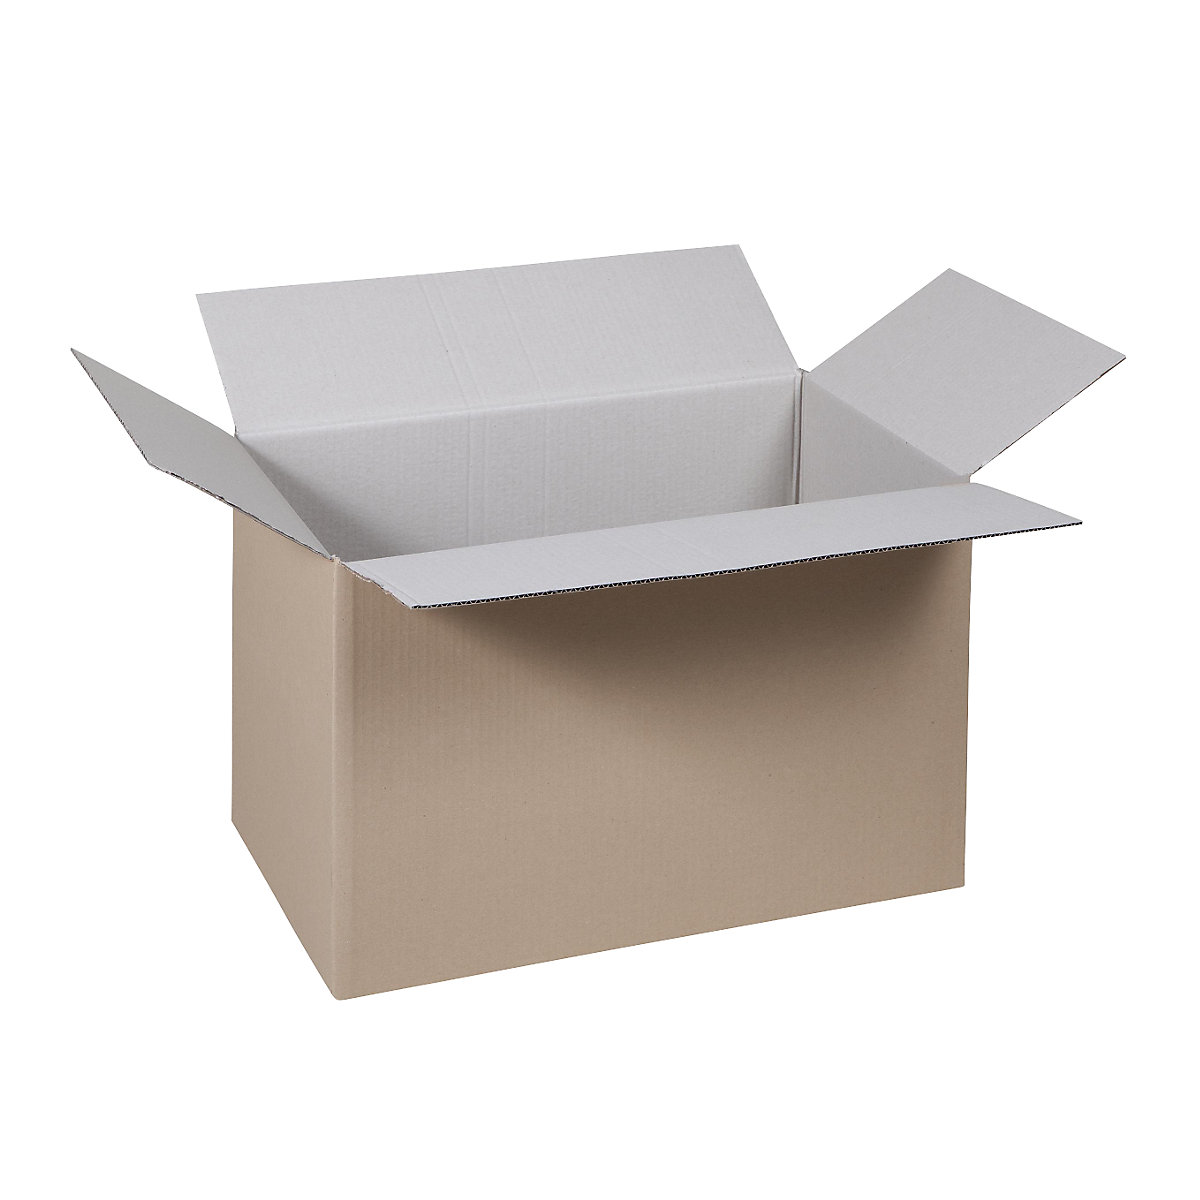 Folding cardboard box, FEFCO 0201, made of single fluted cardboard, internal dimensions 430 x 305 x 315 mm, pack of 100-39